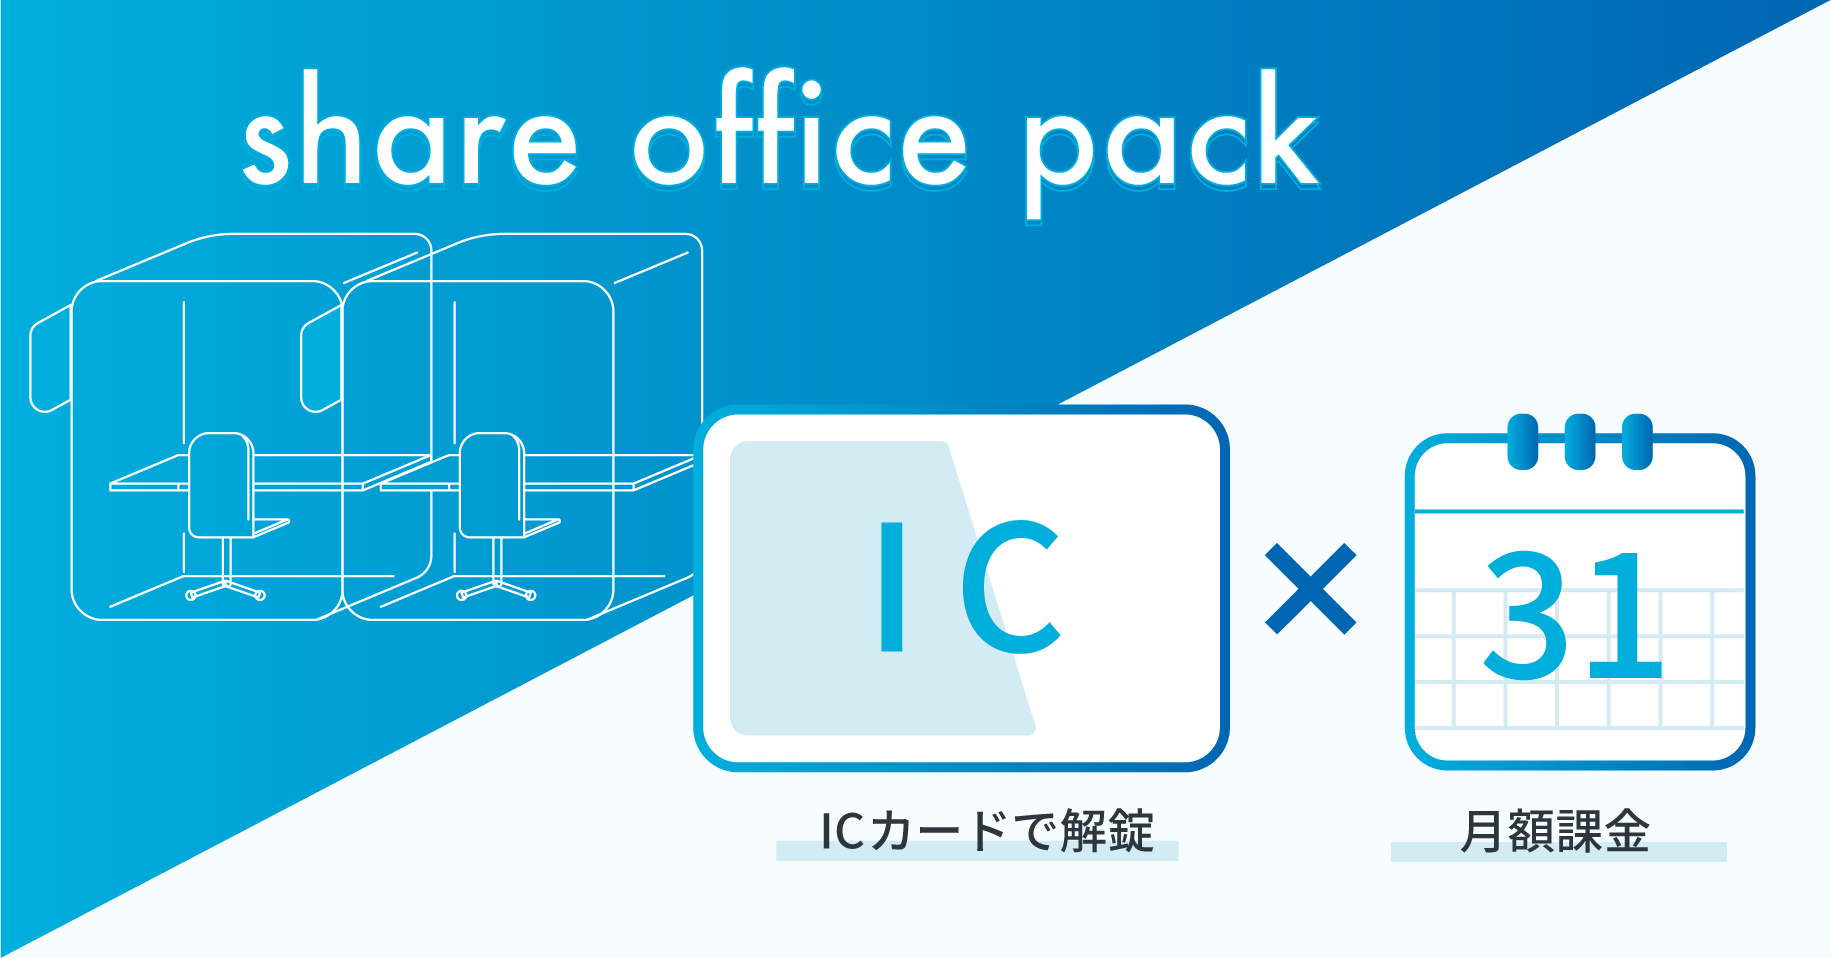 share office pack ICカードで解錠 x 月額課金